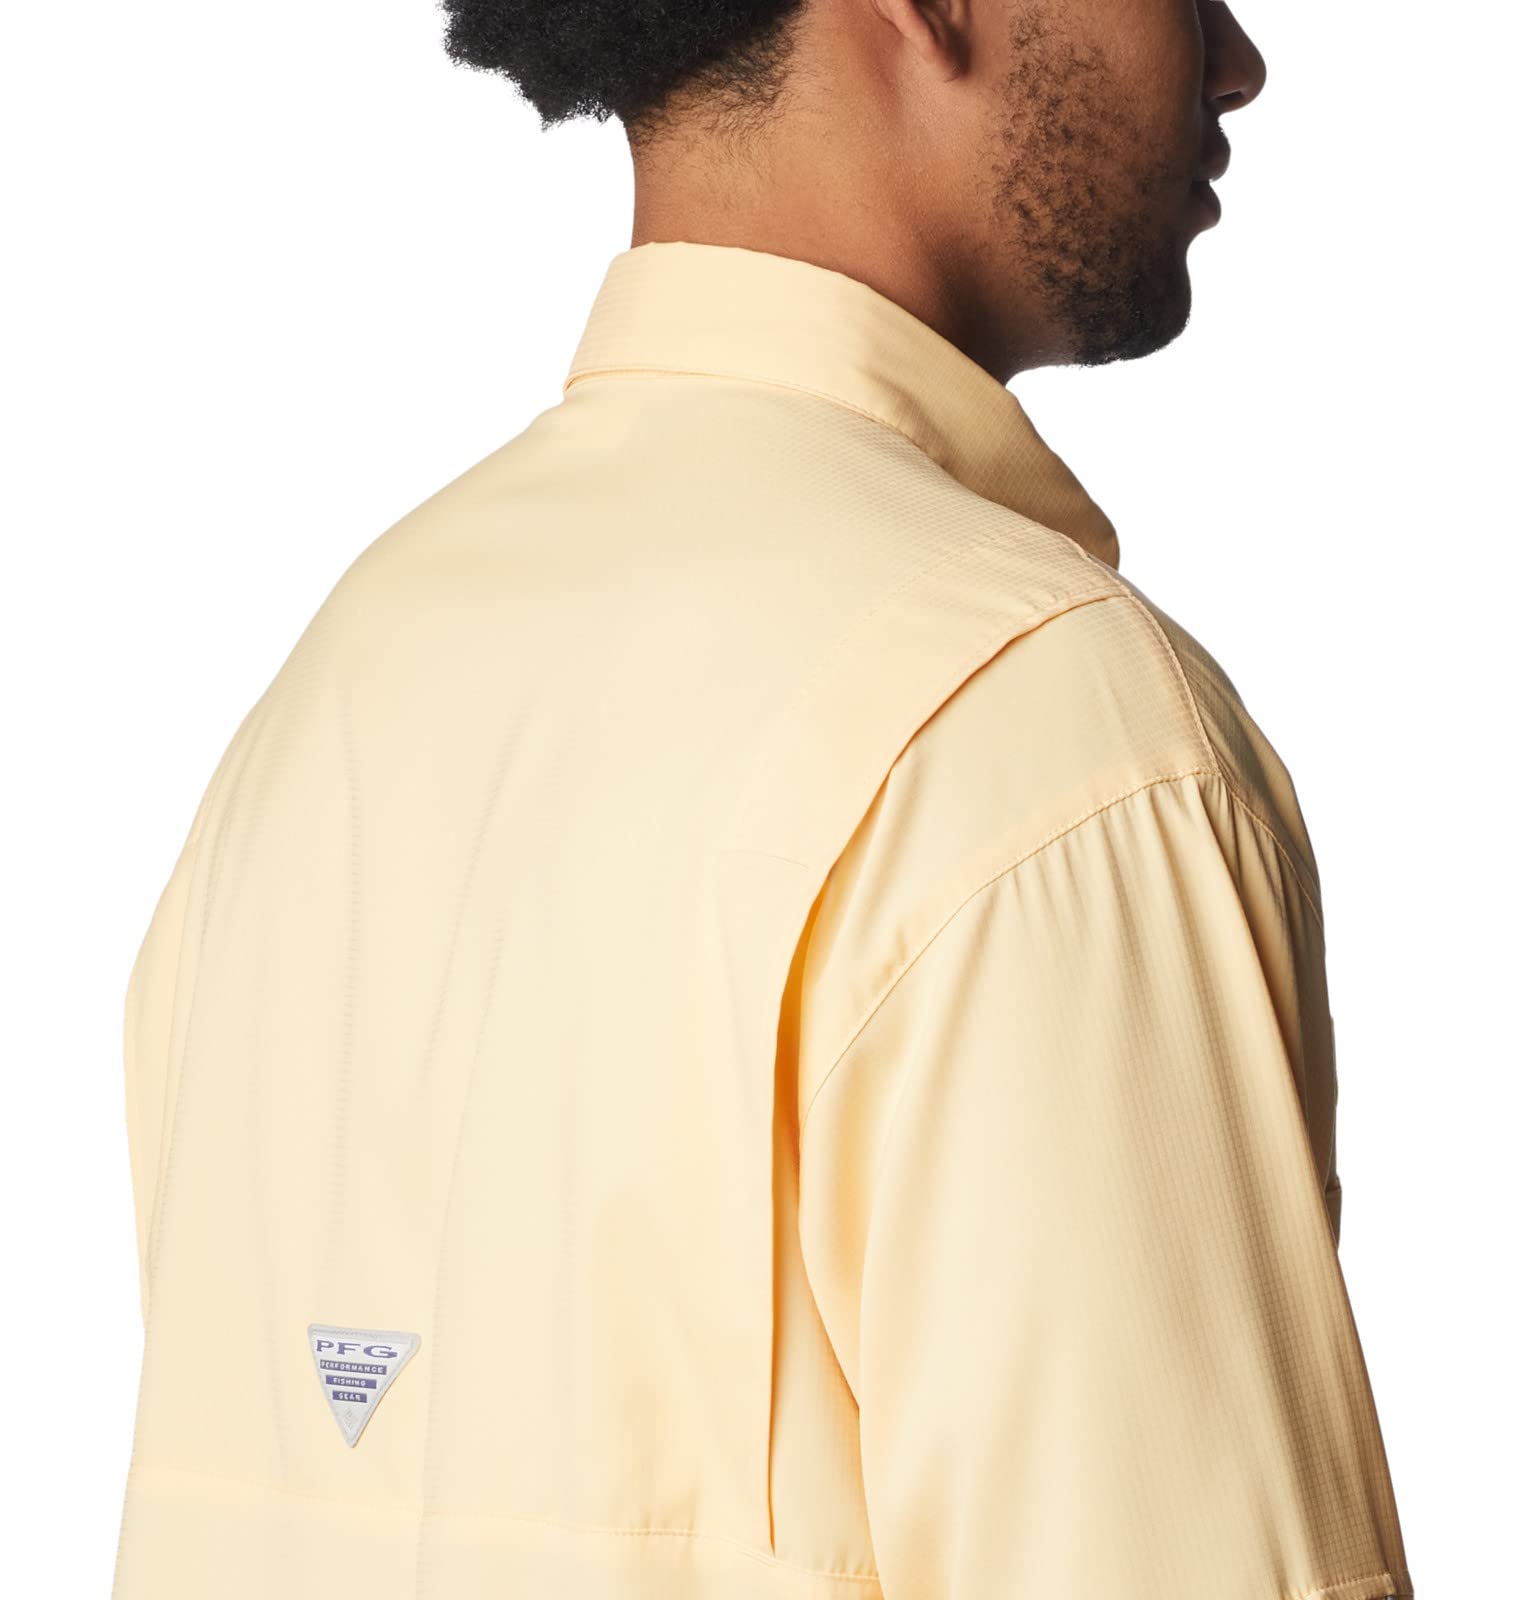 Columbia Men's Tamiami Ii Long Sleeve Shirt